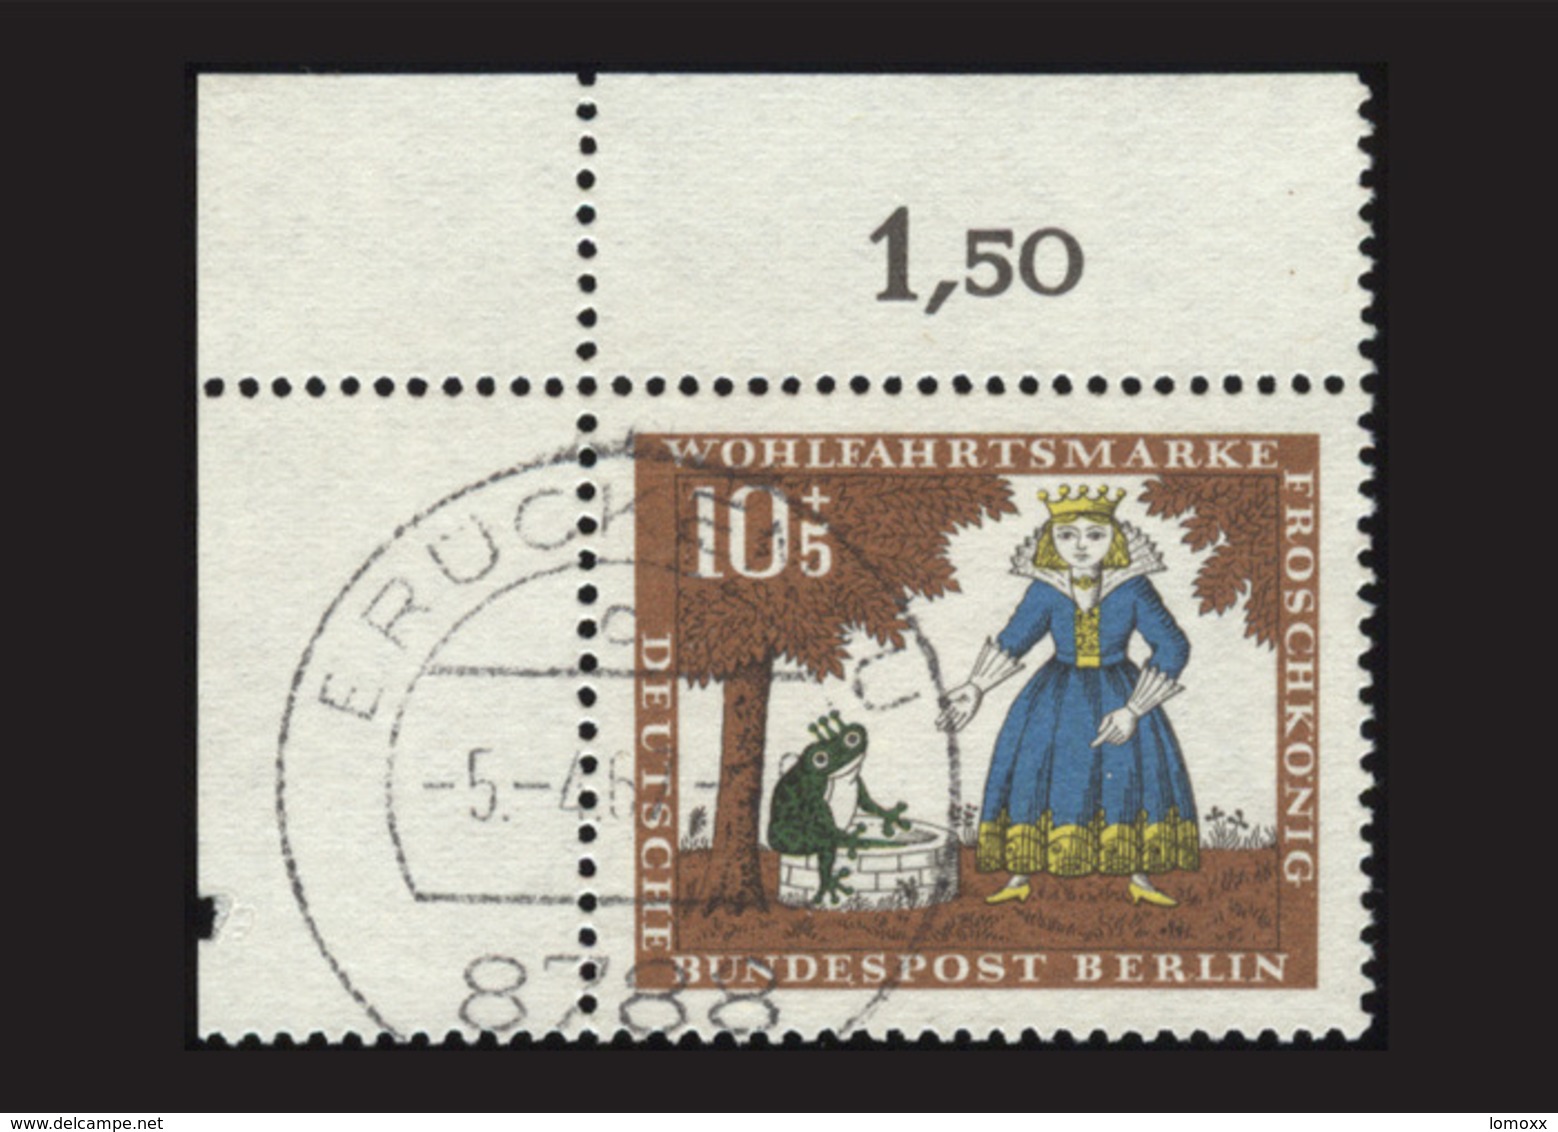 Berlin 1966, Michel-Nr. 295, Wohlfahrt 1966, 10 Pf., Eckrand Links Oben, Gestempelt - Usados